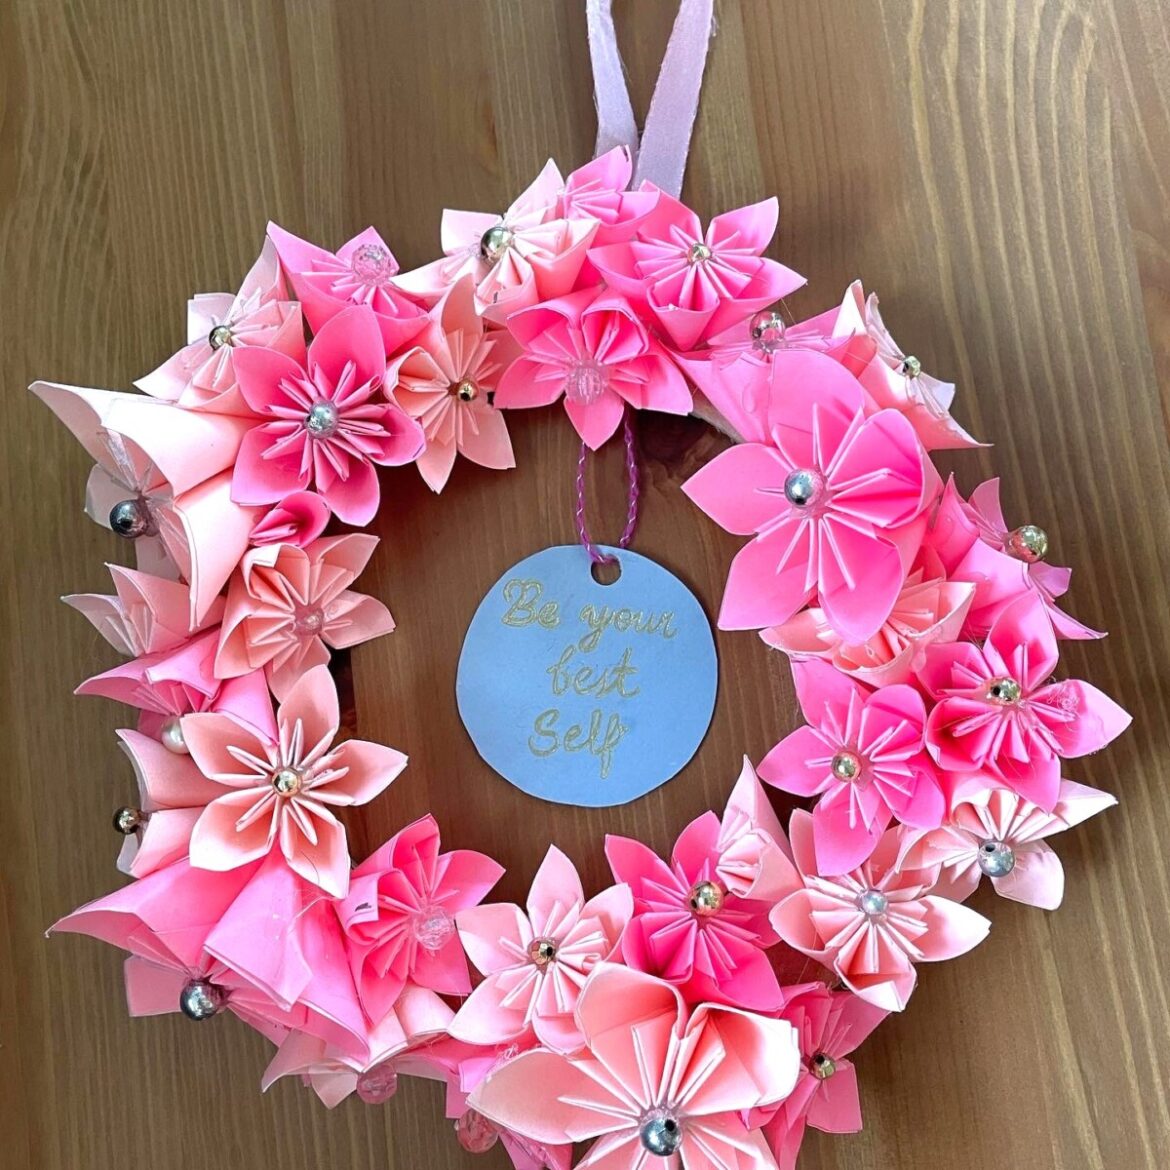 Three Fun Paper Flower Crafts to Make